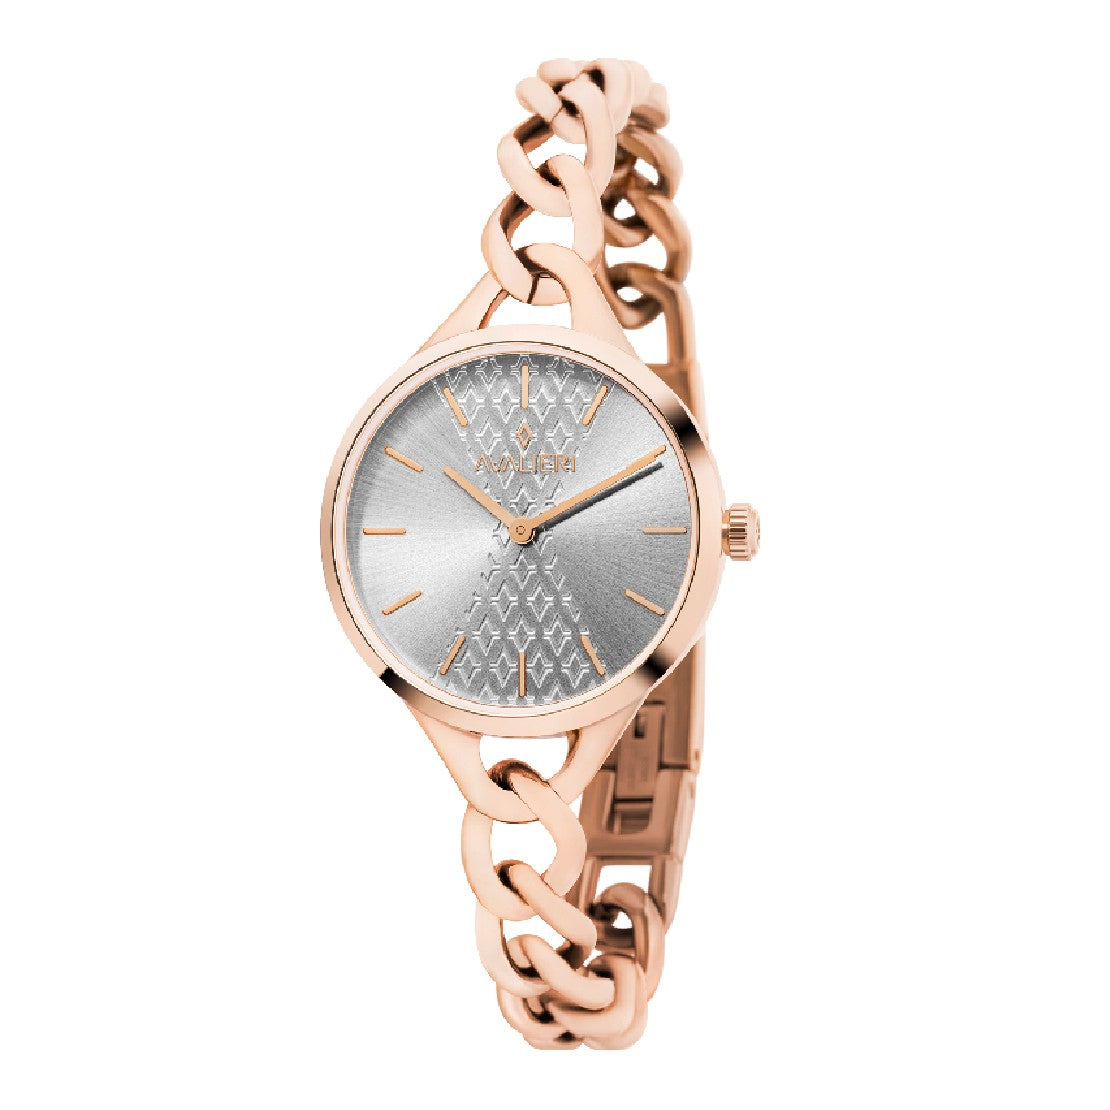 Avalieri Women's Quartz Watch Silver Dial - AV-2335B